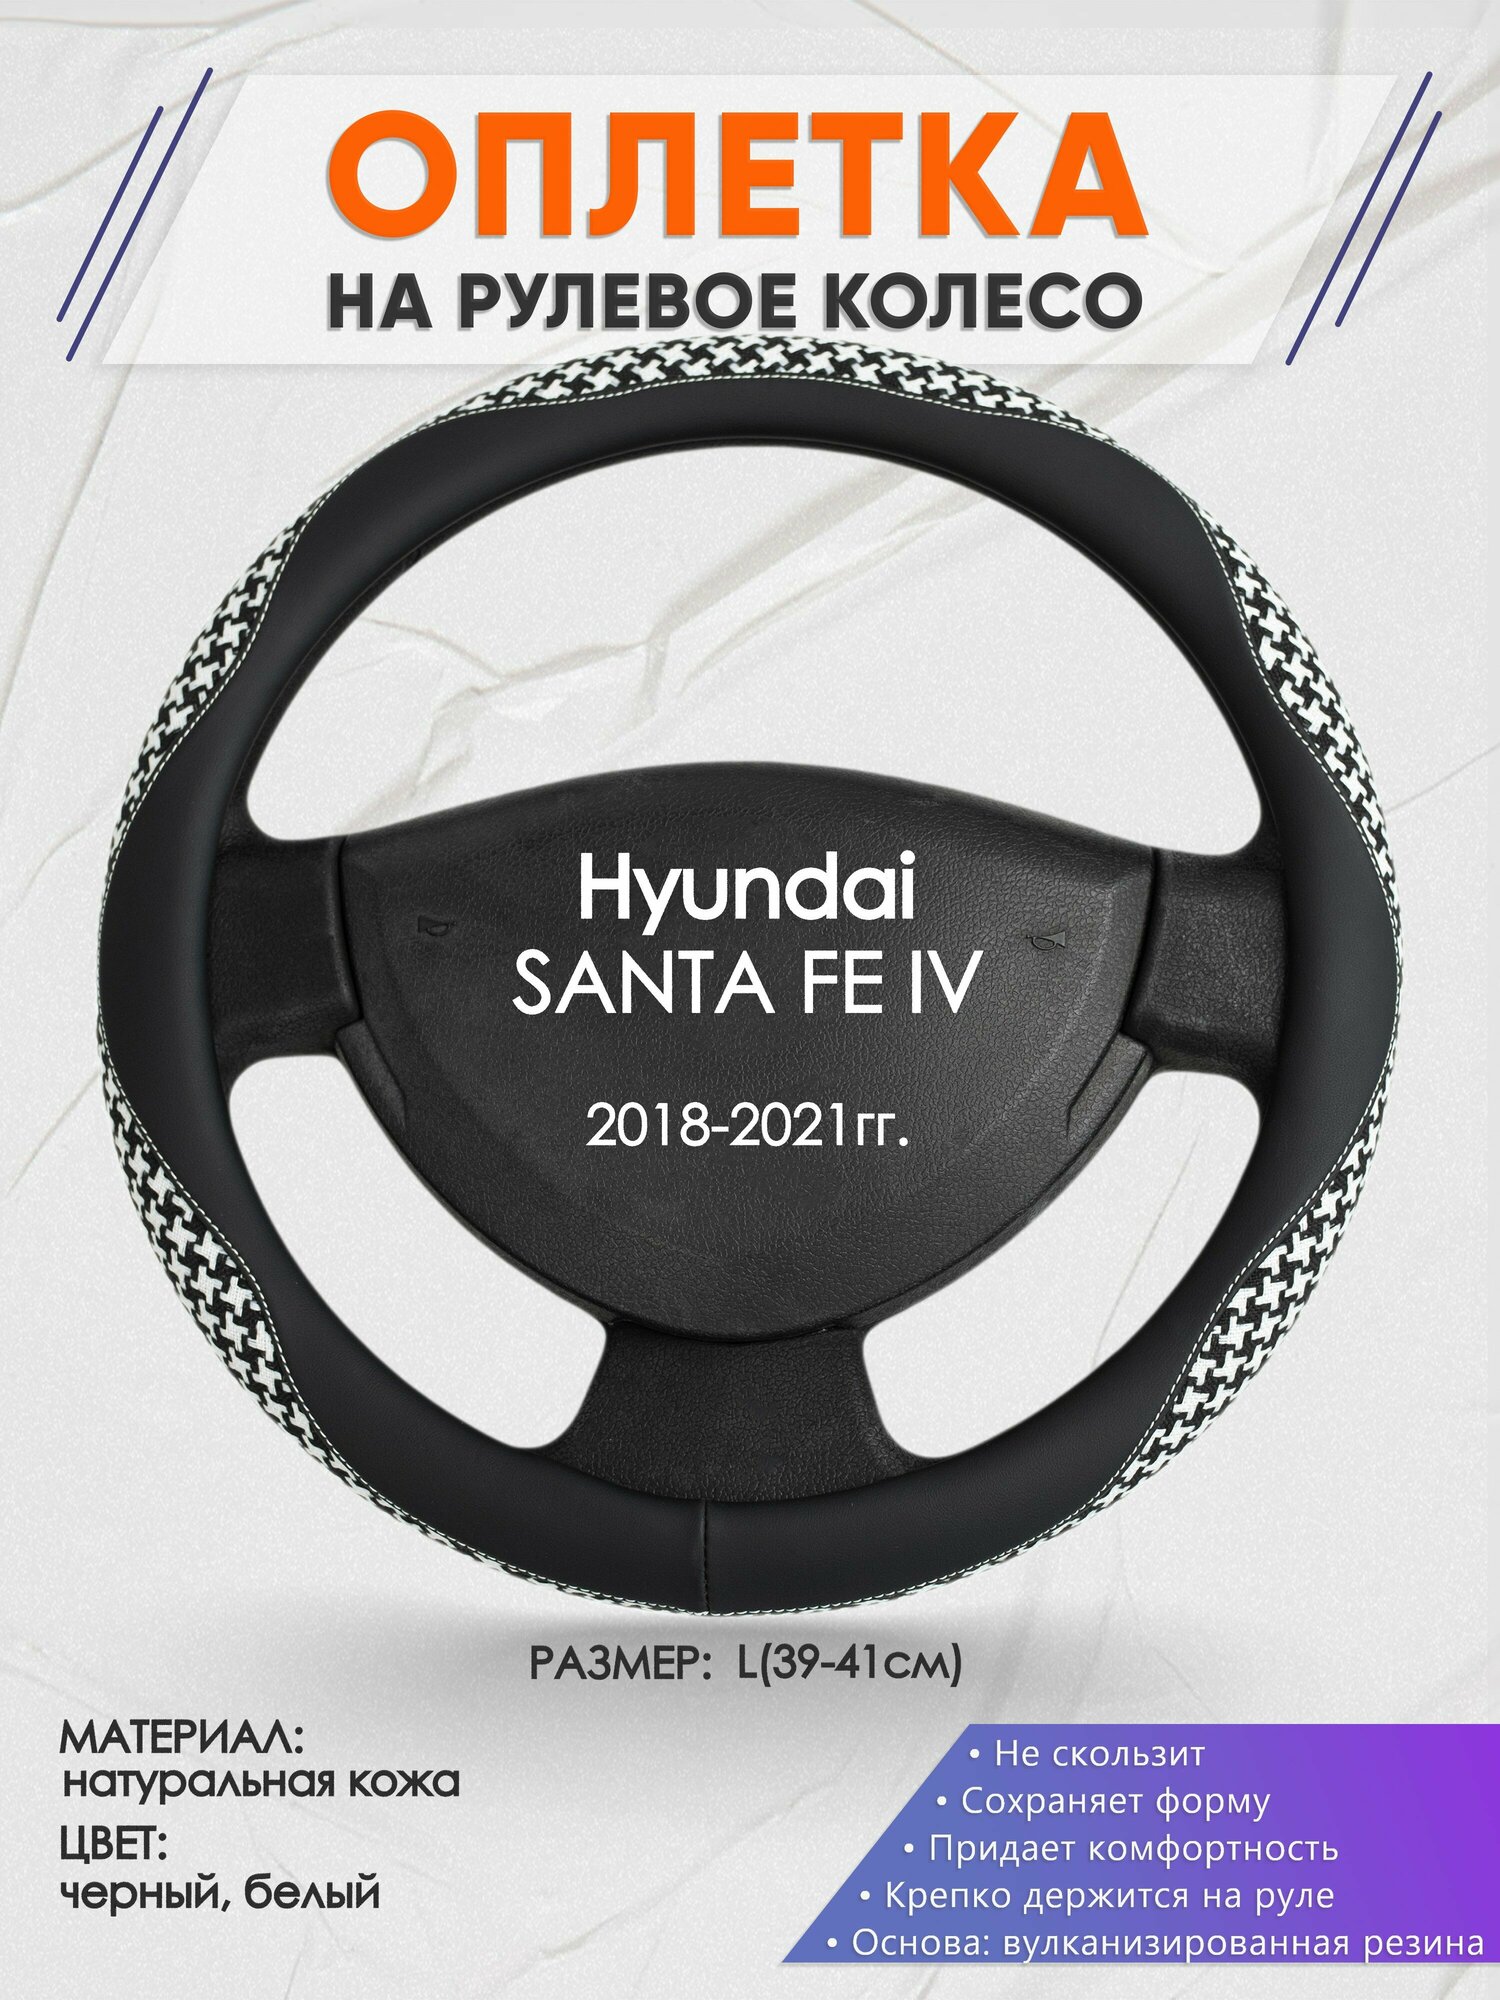 Оплетка на руль для Hyundai SANTA FE 4(Хендай Санта фе) 2018-2021, L(39-41см), Натуральная кожа 21